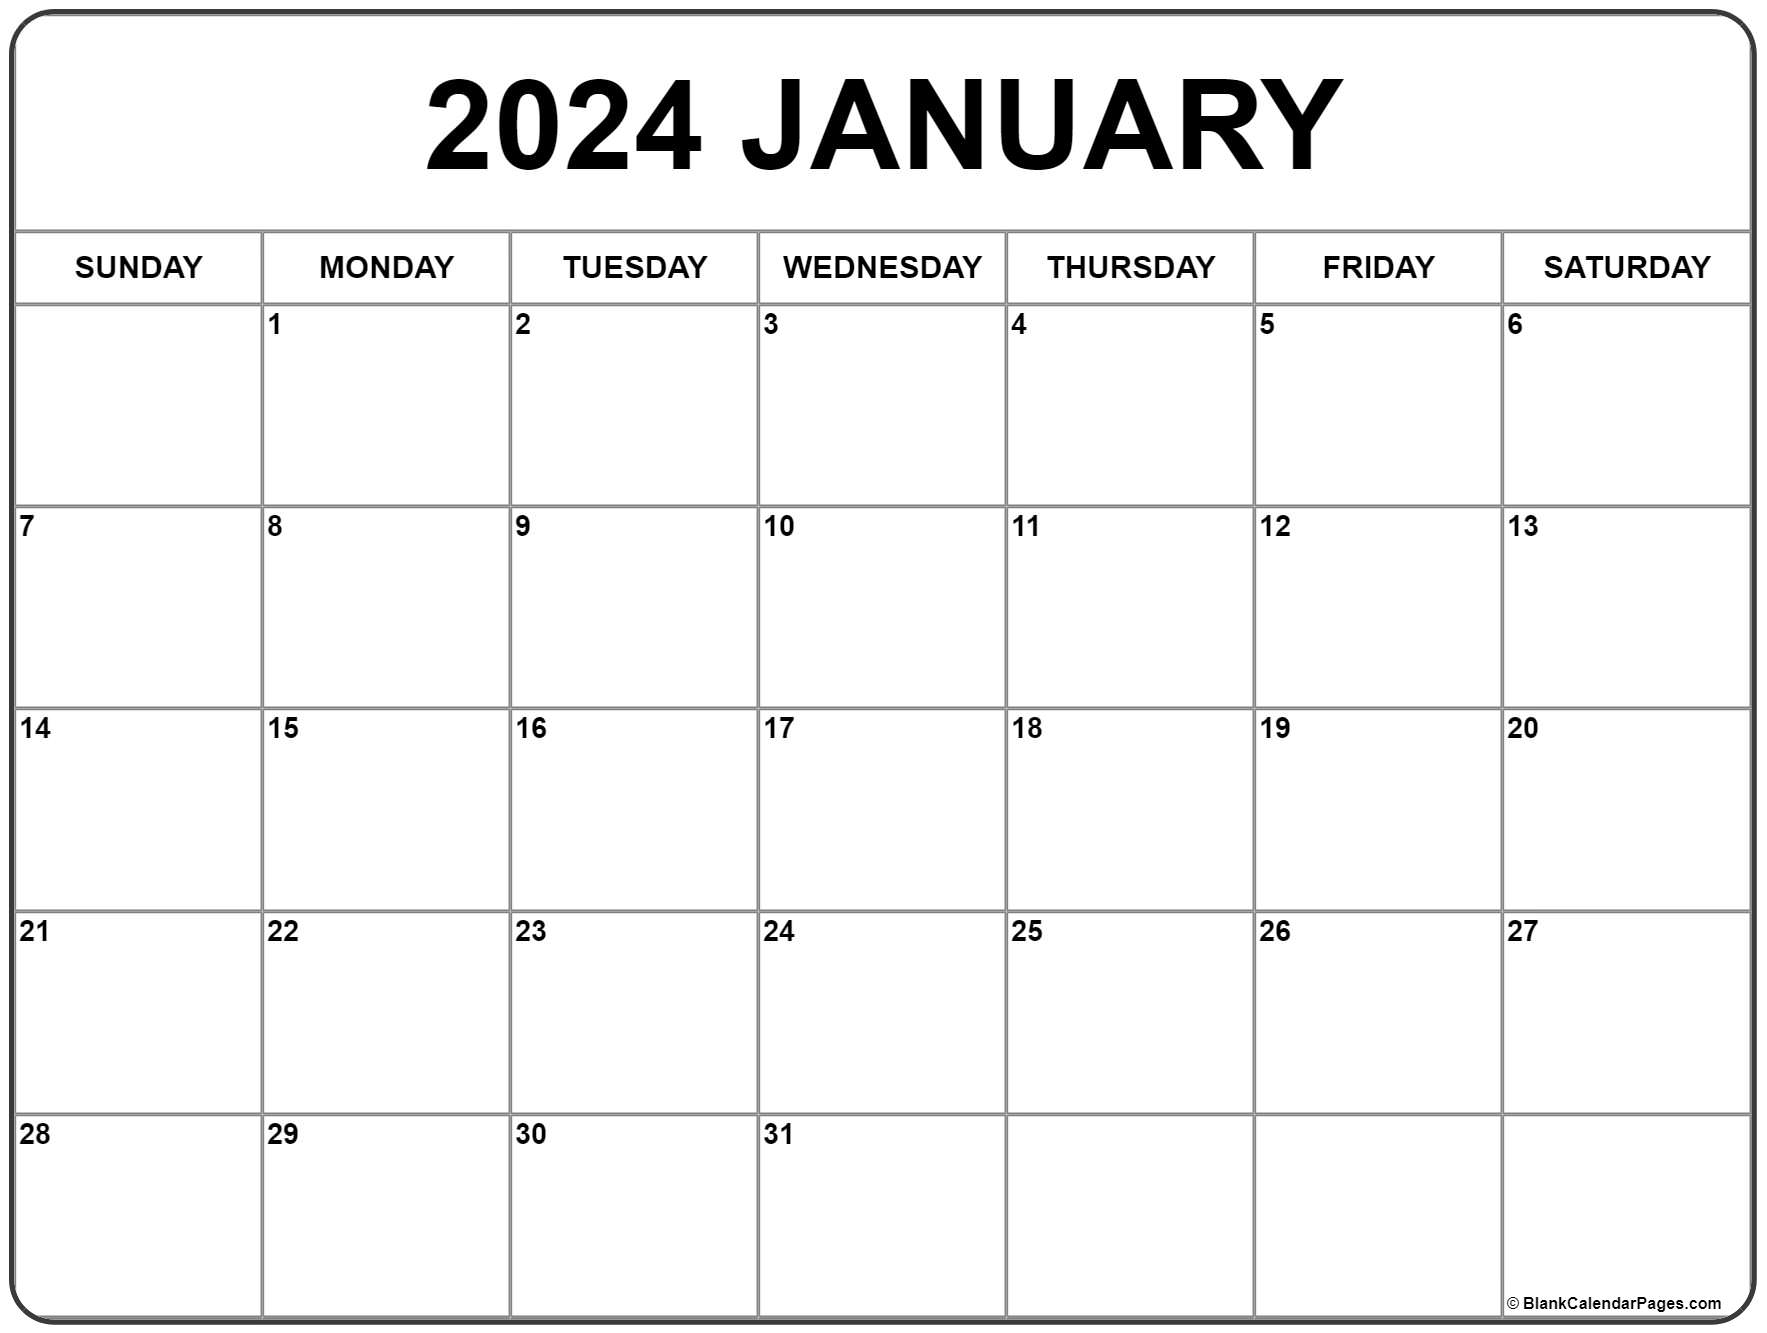 December 2022 January 2023 Calendar Printable October Calendar 2022